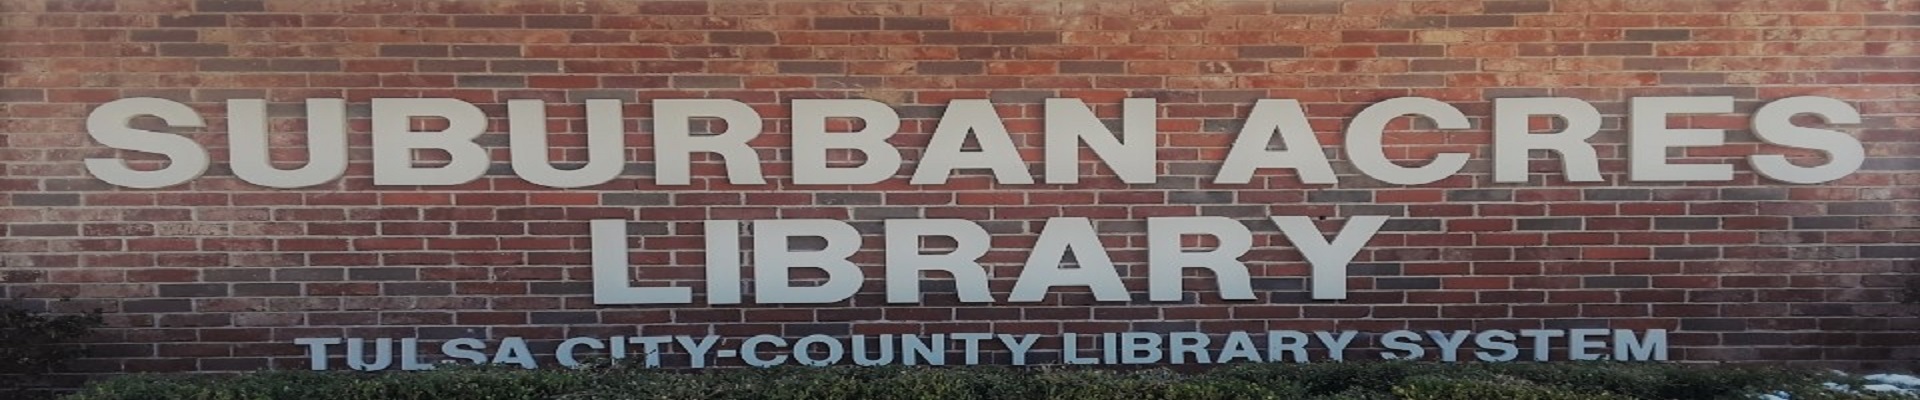 Suburban Acres Library